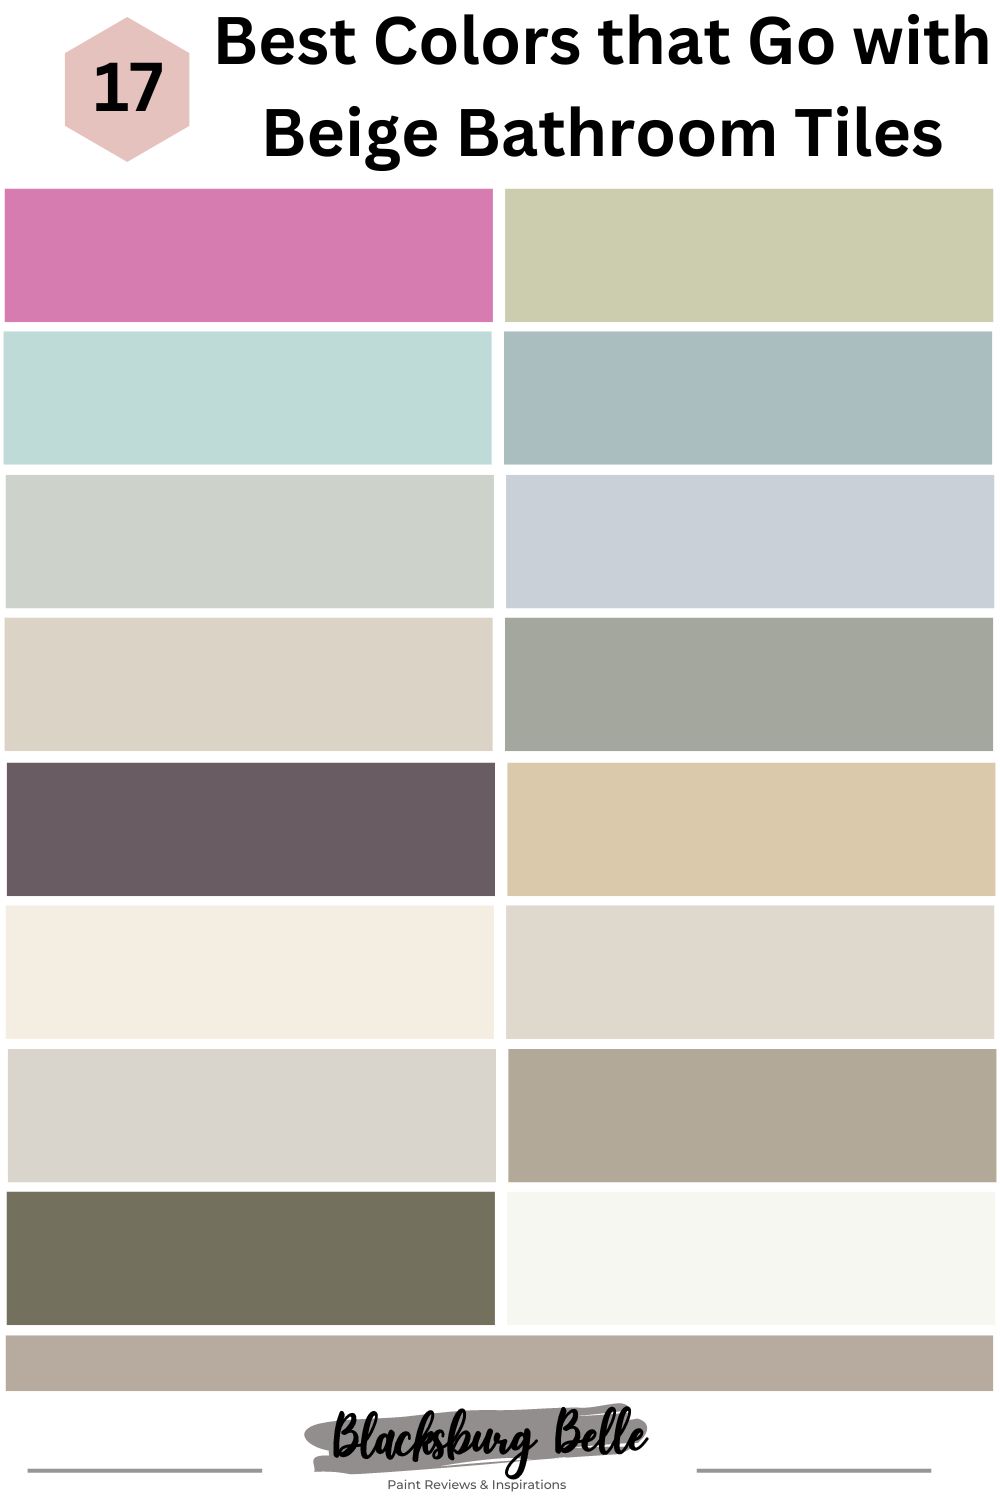 How to Match Paint Colors & Tile Floors